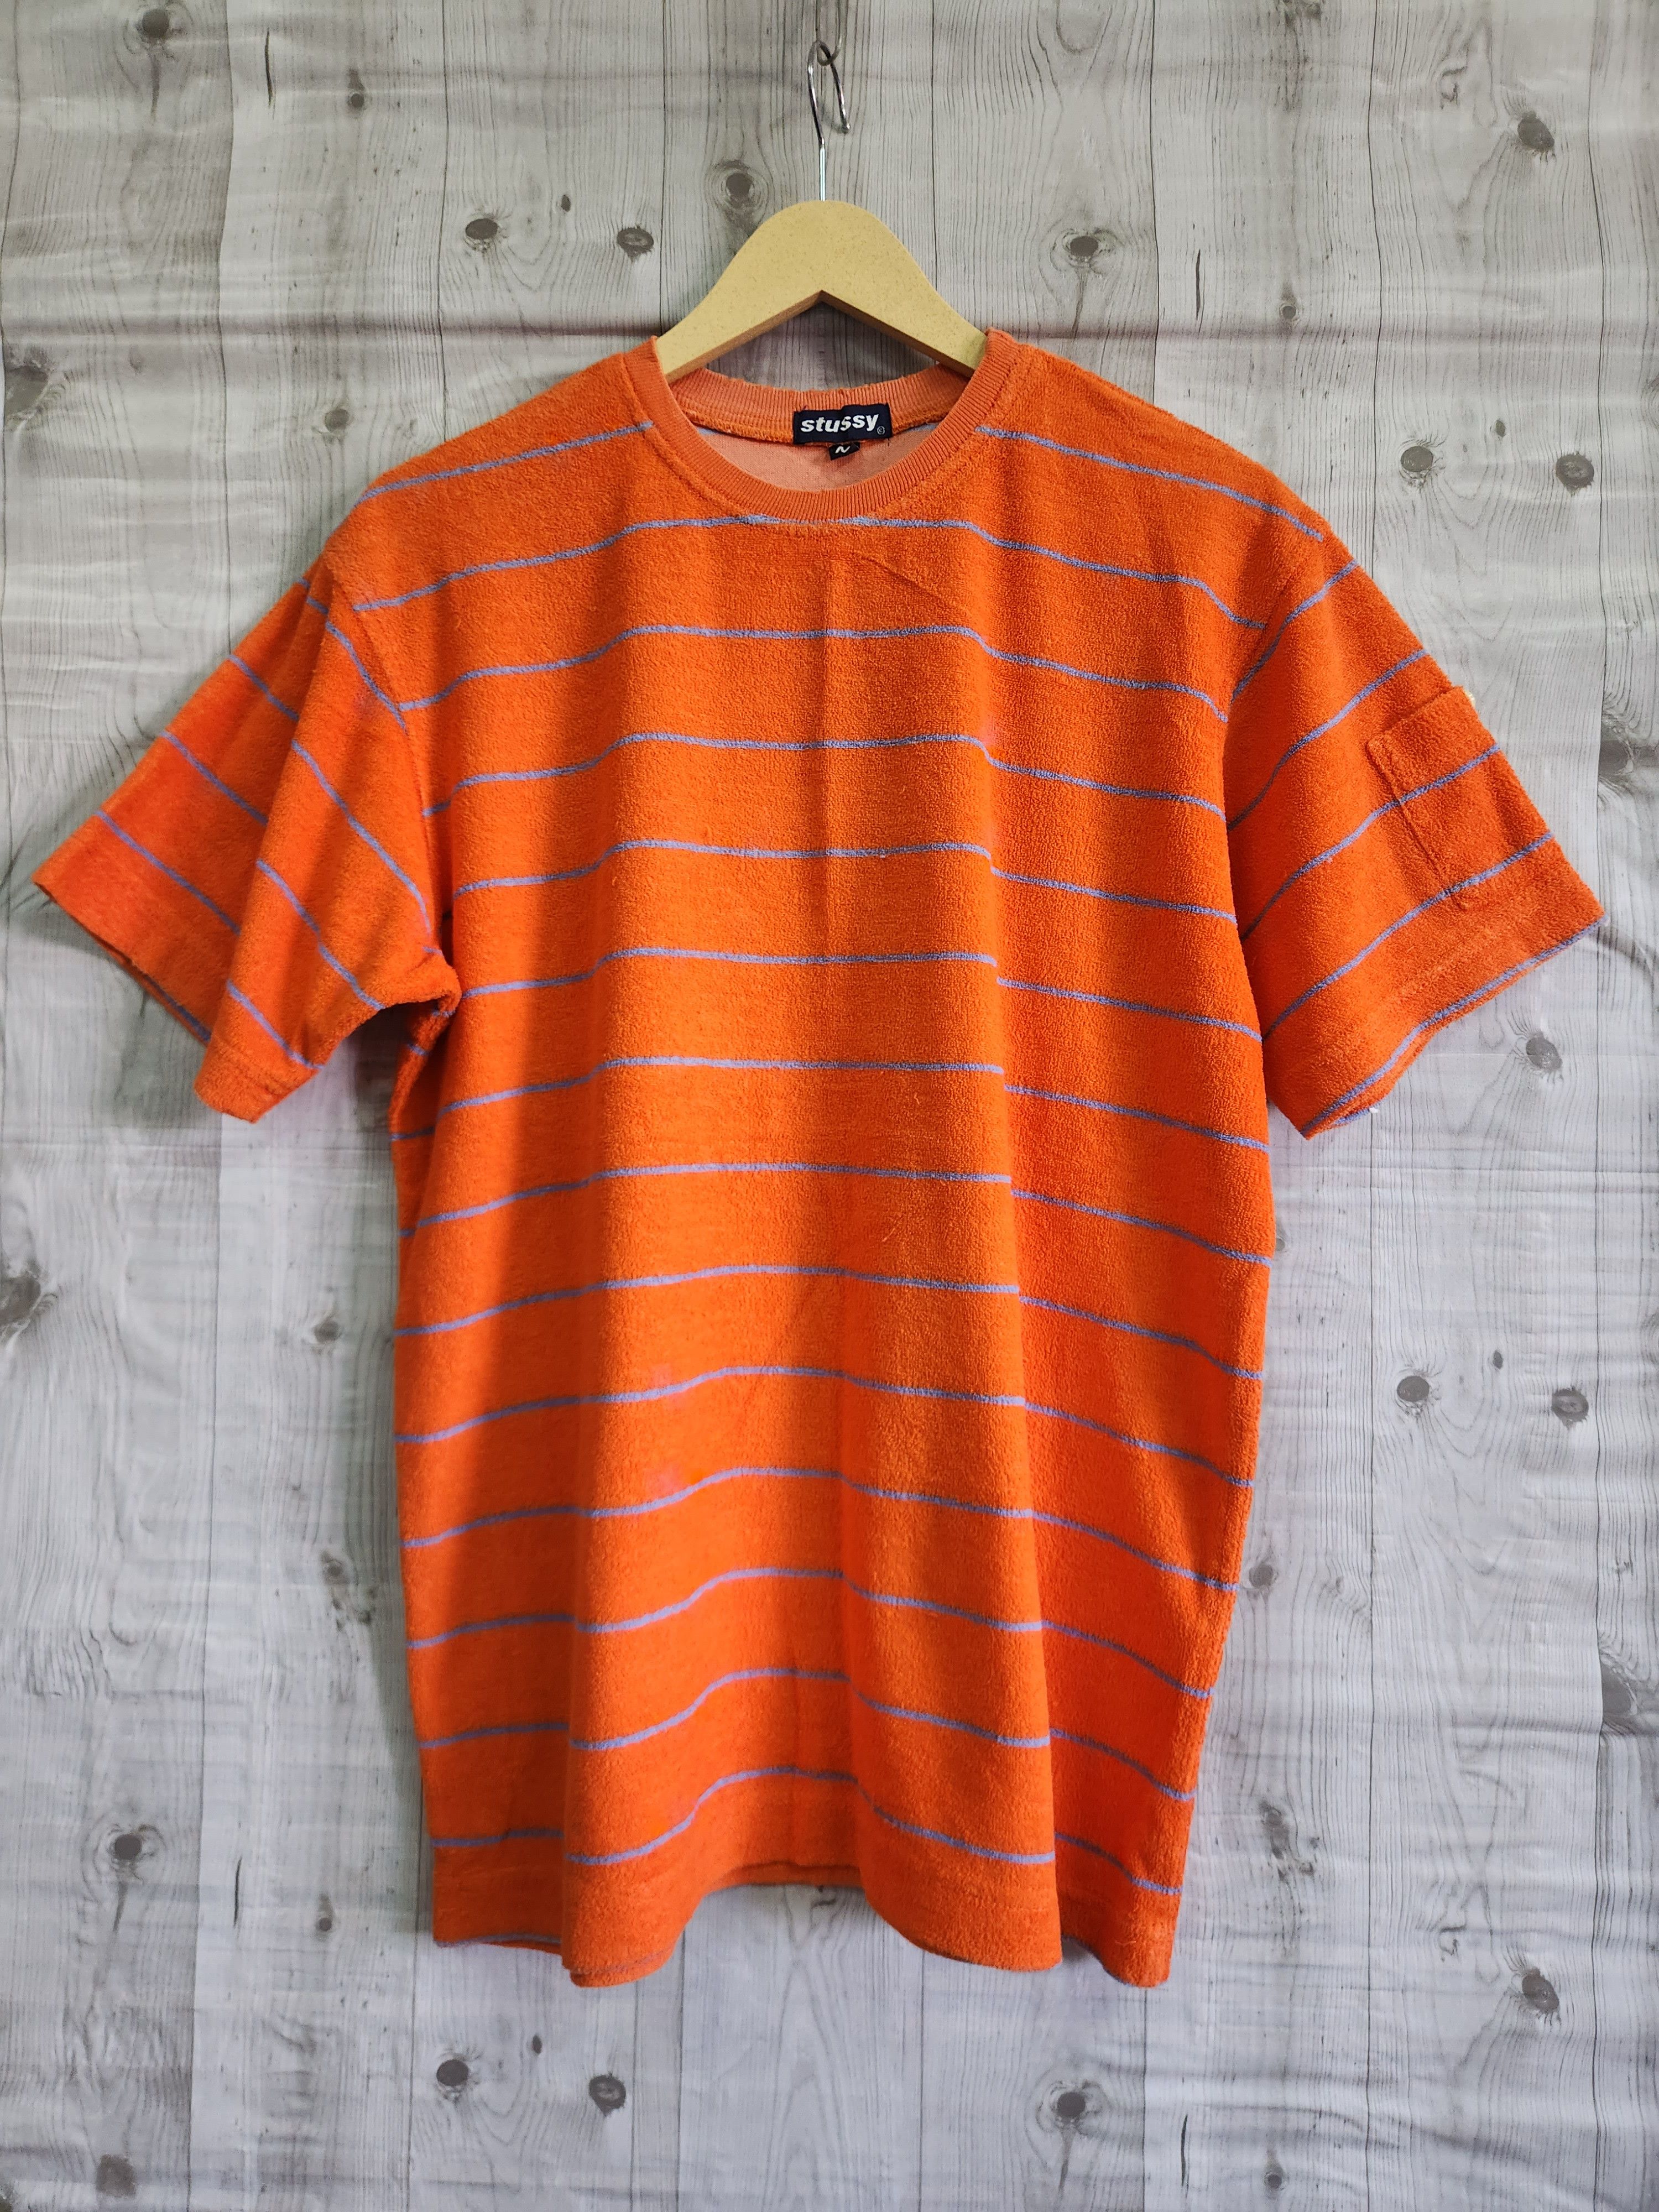 Vintage Stussy Rare Orange Stripes Arm Pocket TShirt - 1